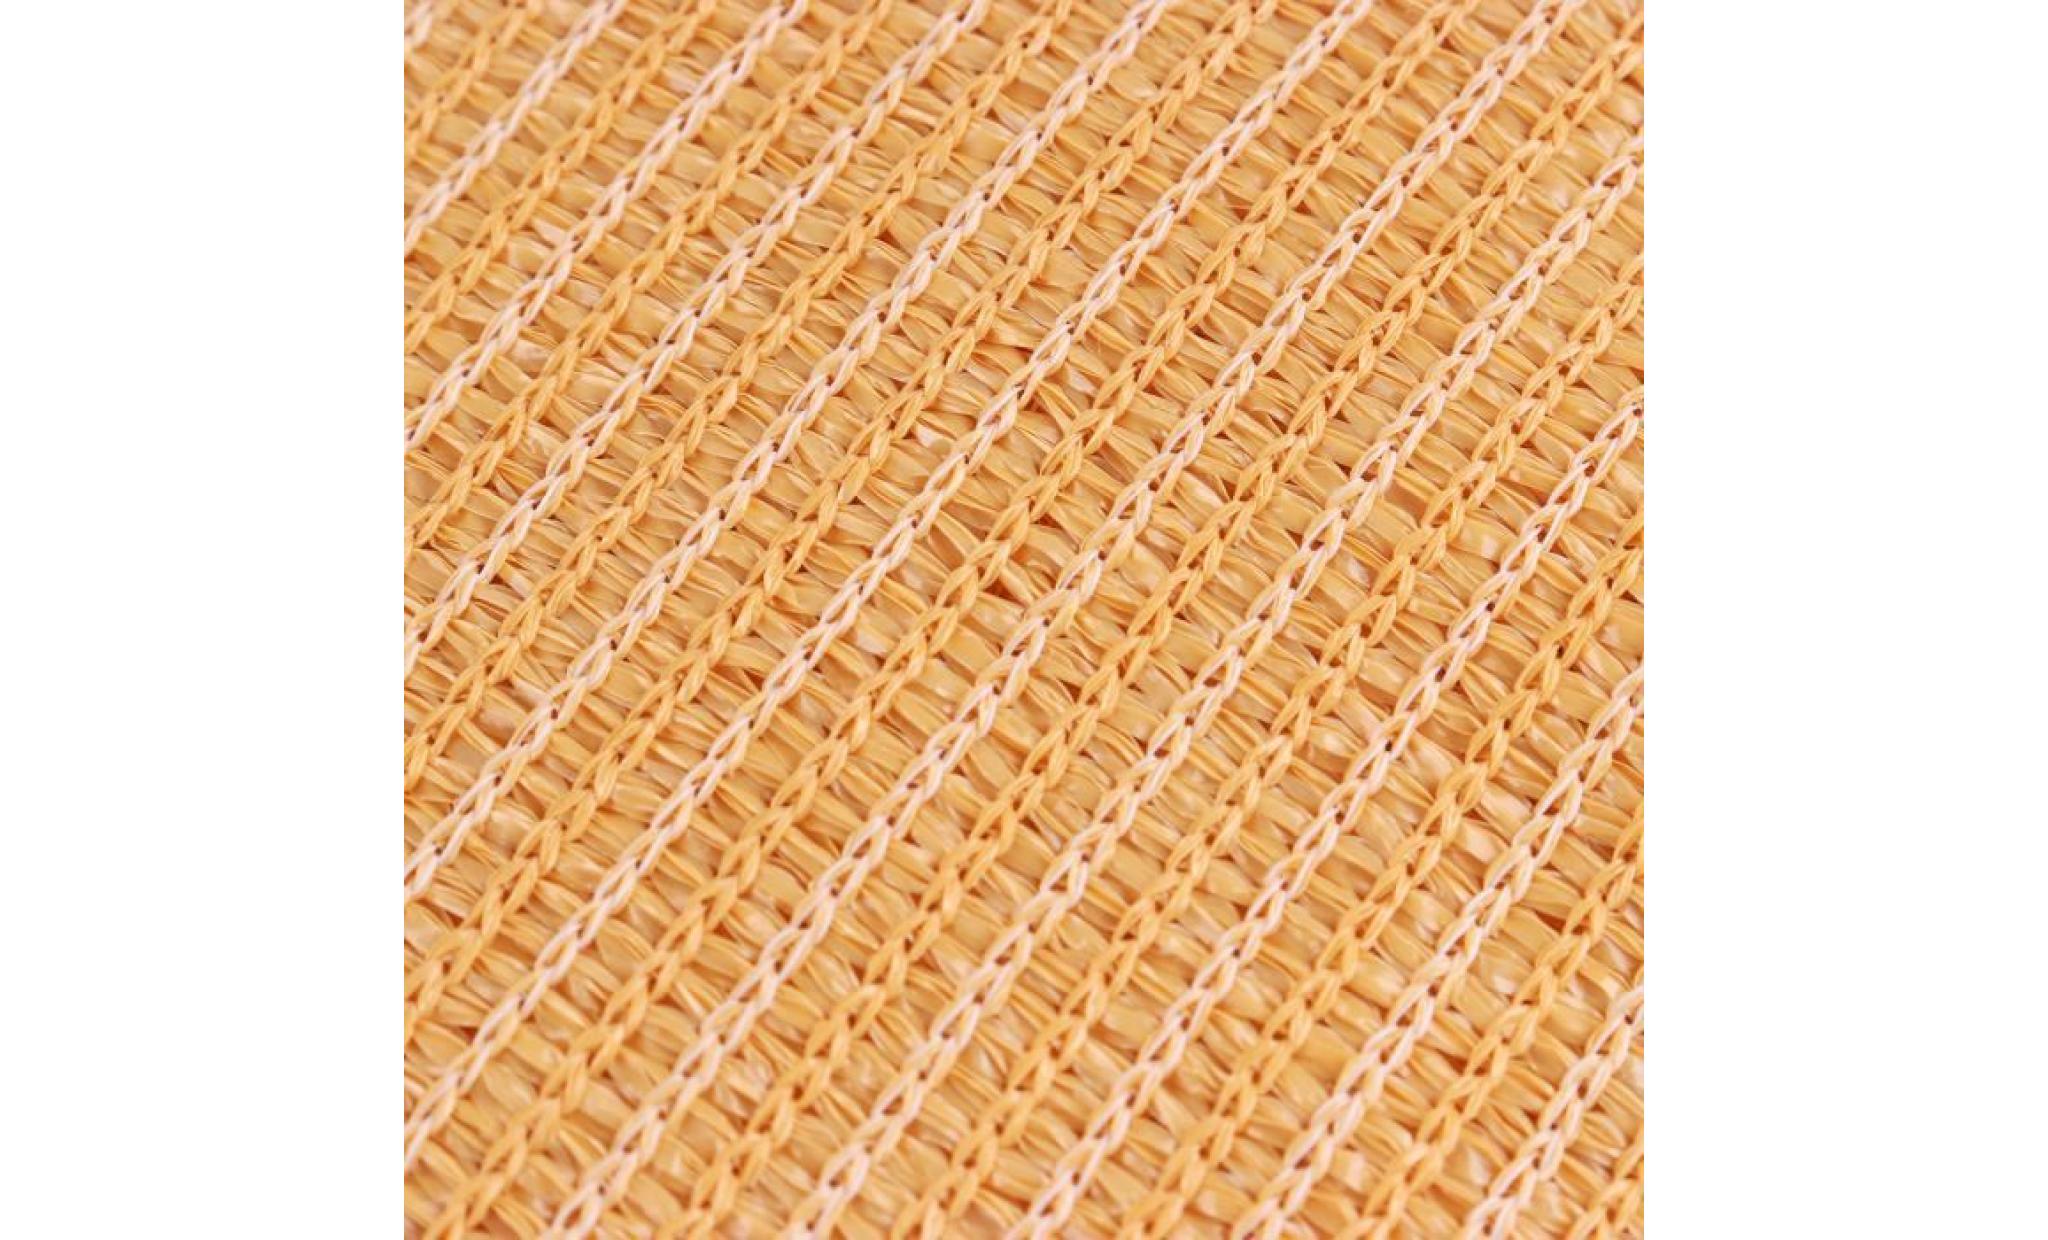 tempsa voile ombrage high density polyethylene farbic toile solaire taud rectangulaire sable 10x16` / 3x5m pas cher